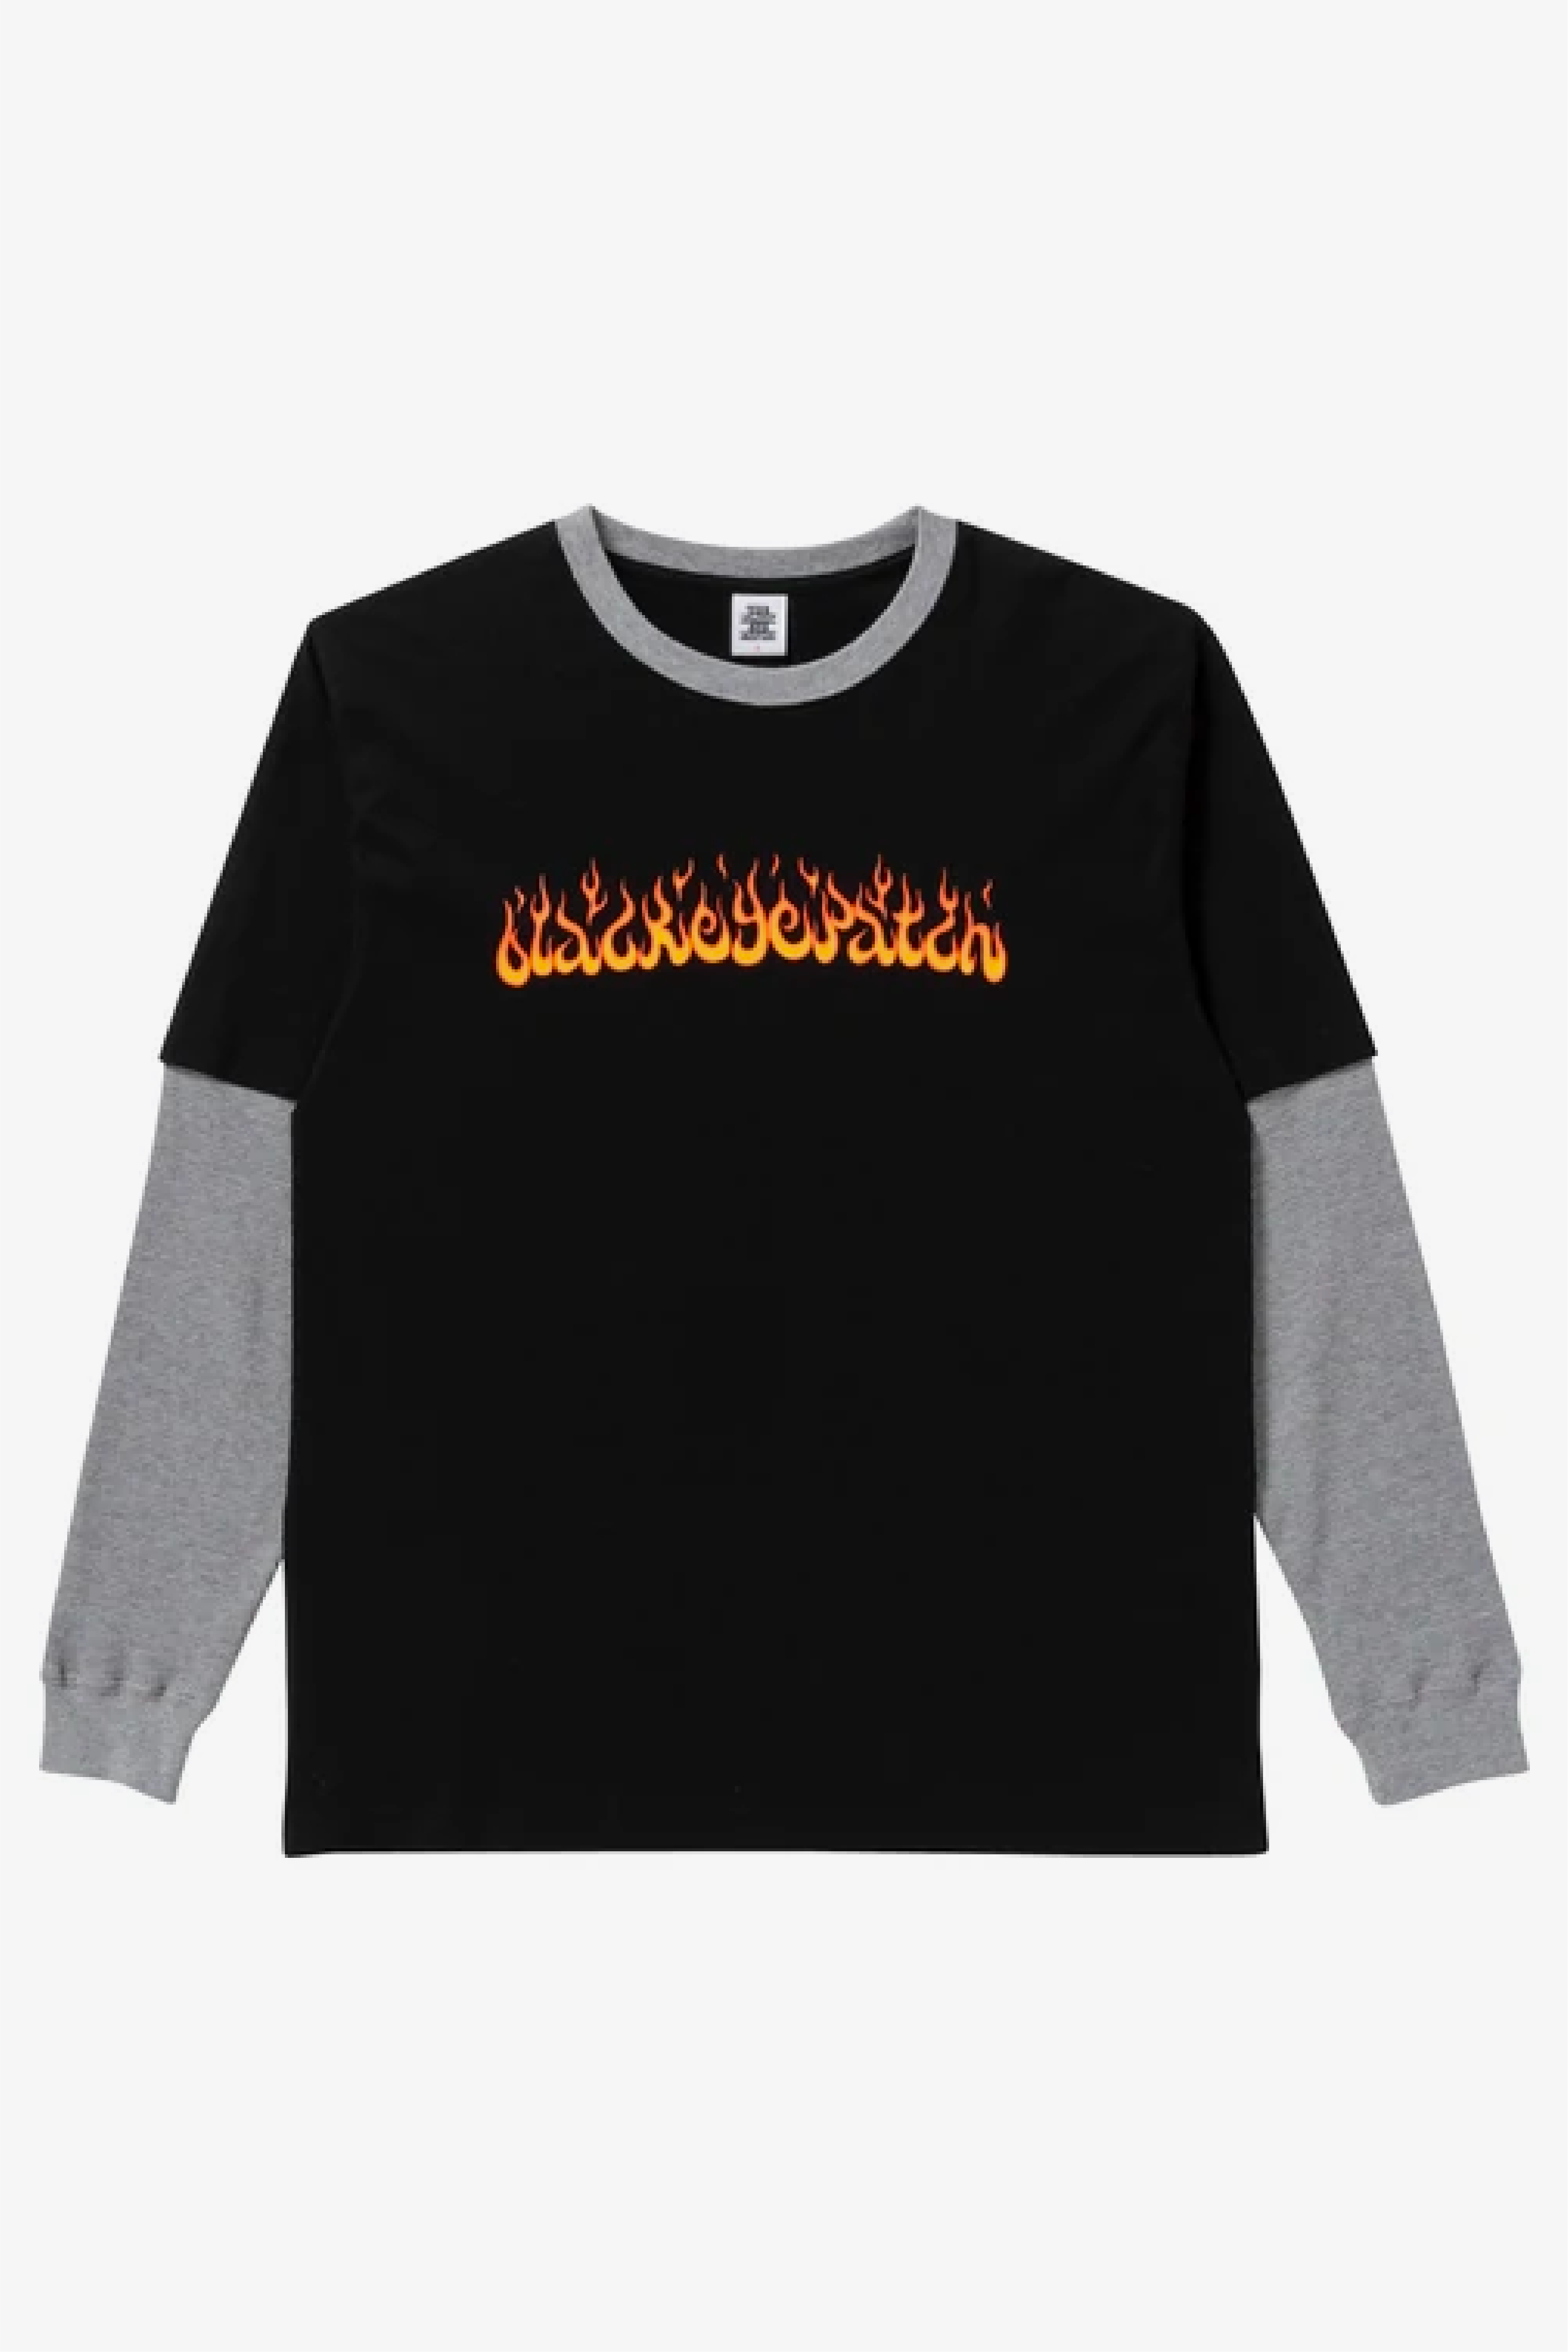 Selectshop FRAME - BLACKEYEPATCH Flames Layered Long Sleeve Tee T-Shirt Dubai